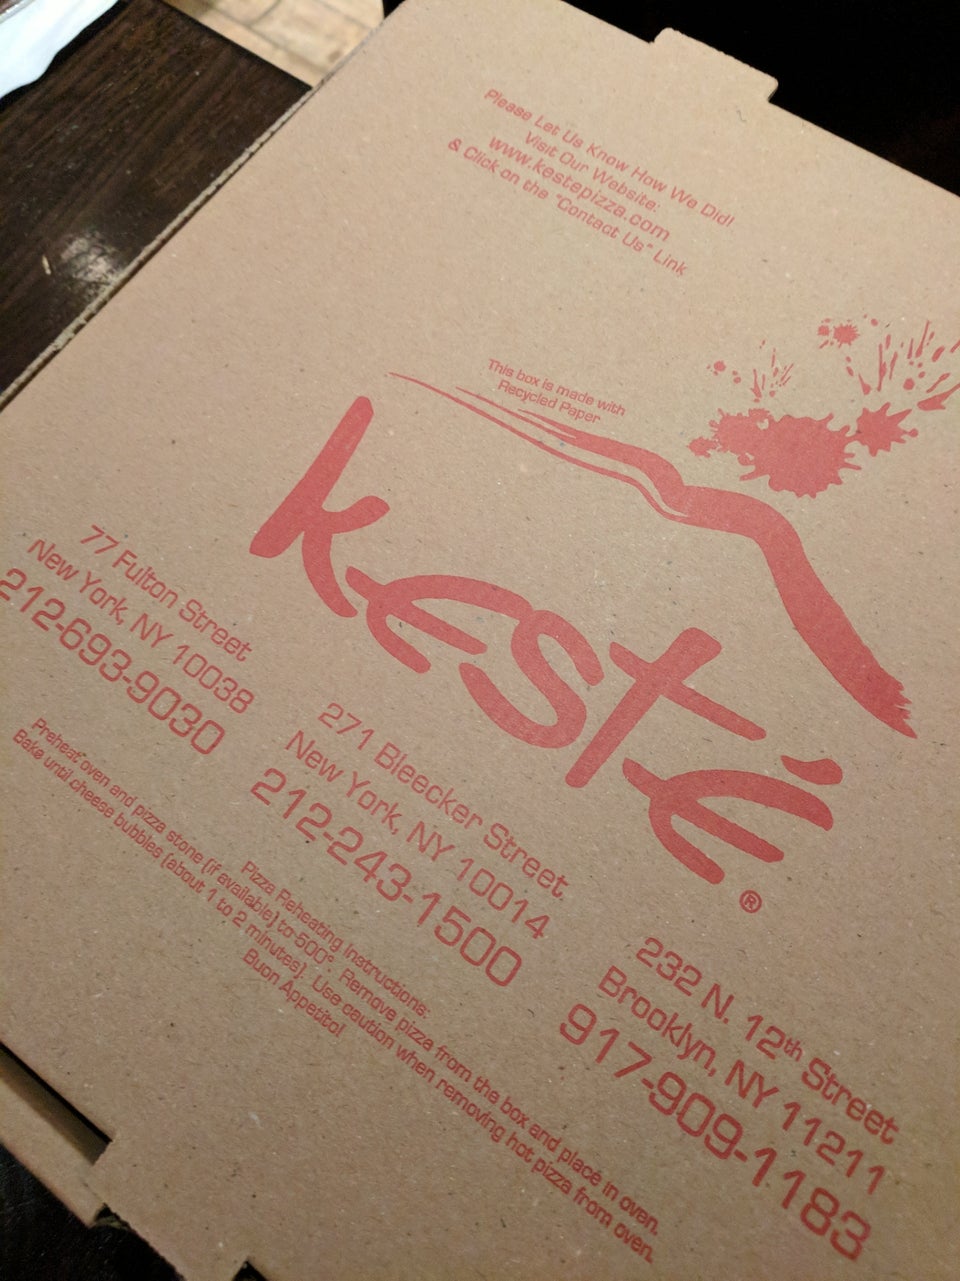 Photo of Kesté Pizza e Vino